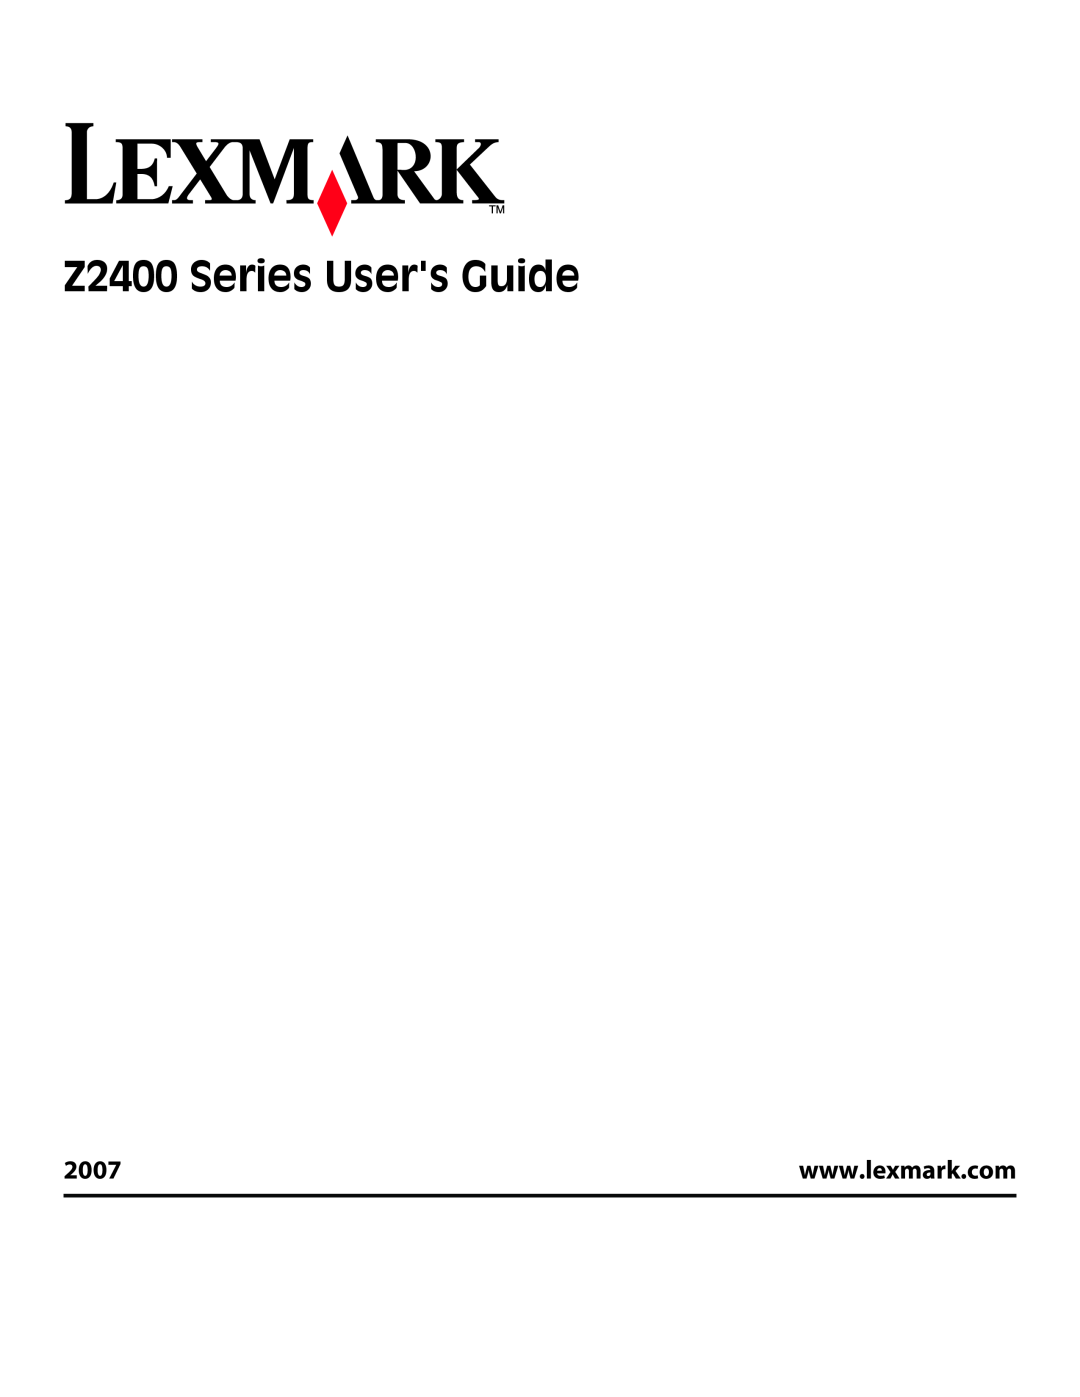 Lexmark manual Z2400 Series Users Guide, 2007 